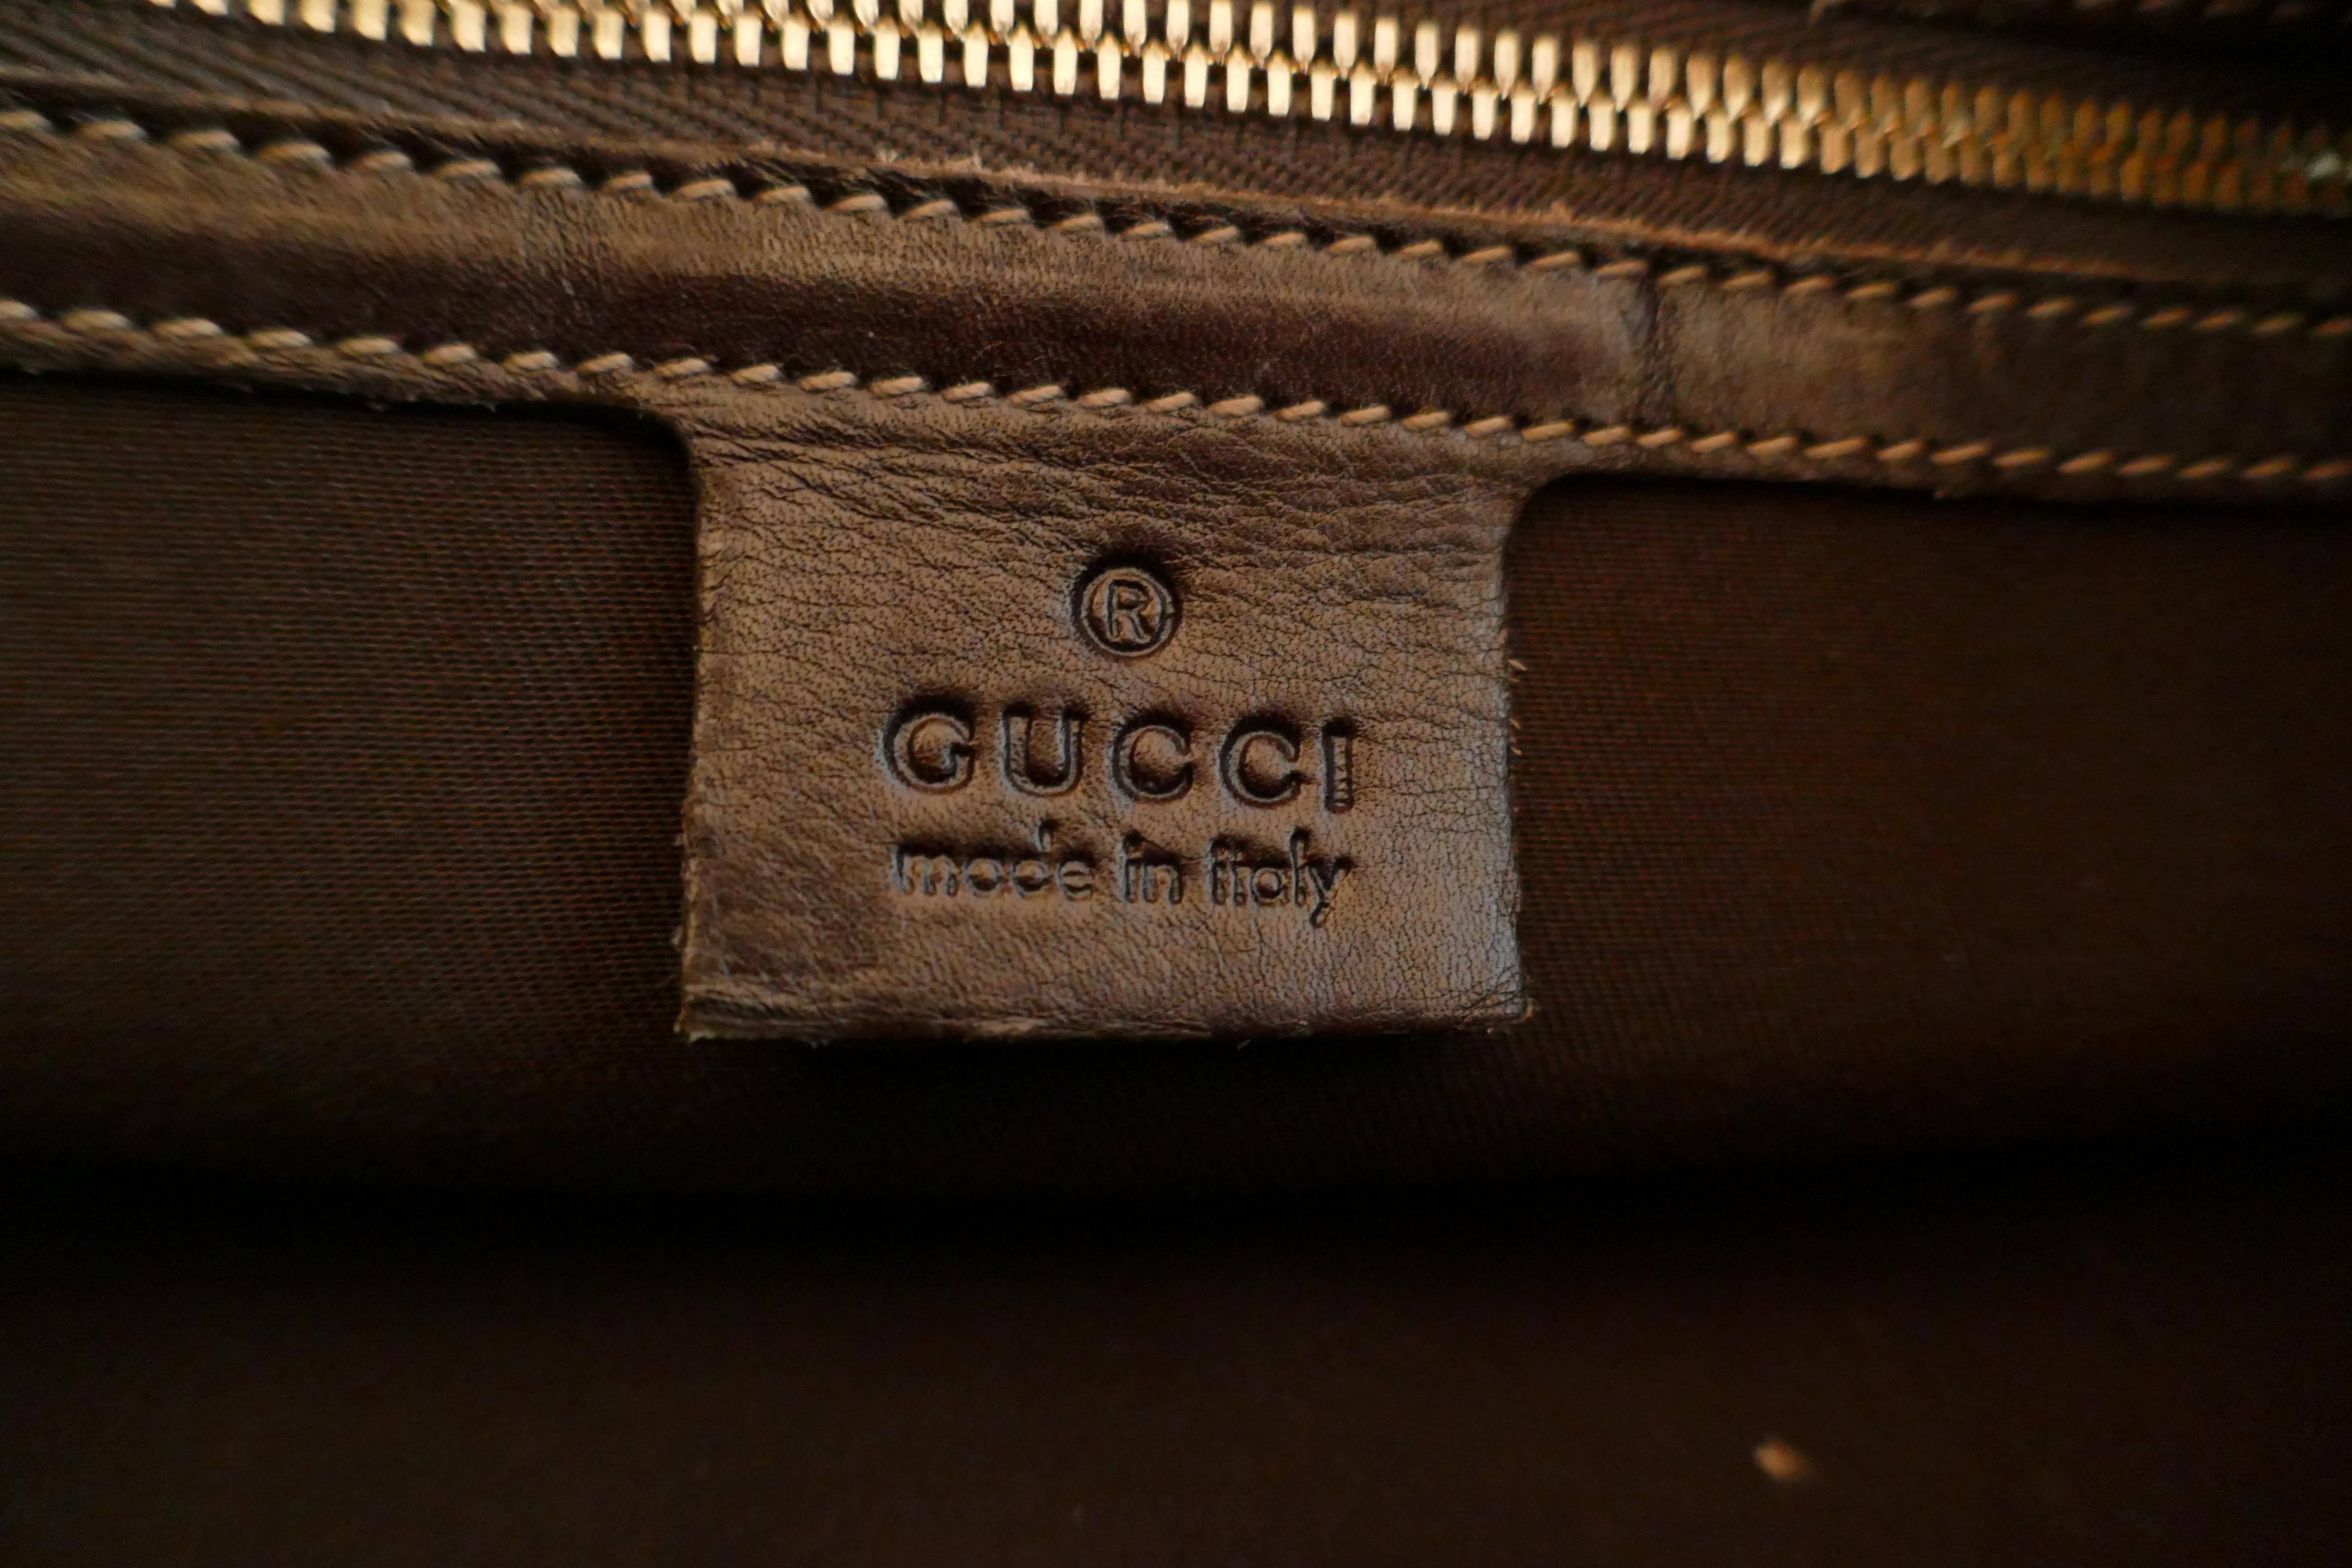  Gucci Vintage Satchel in Guccissima Canvas Wave Handbag, Horse-Bit and Monogram 4